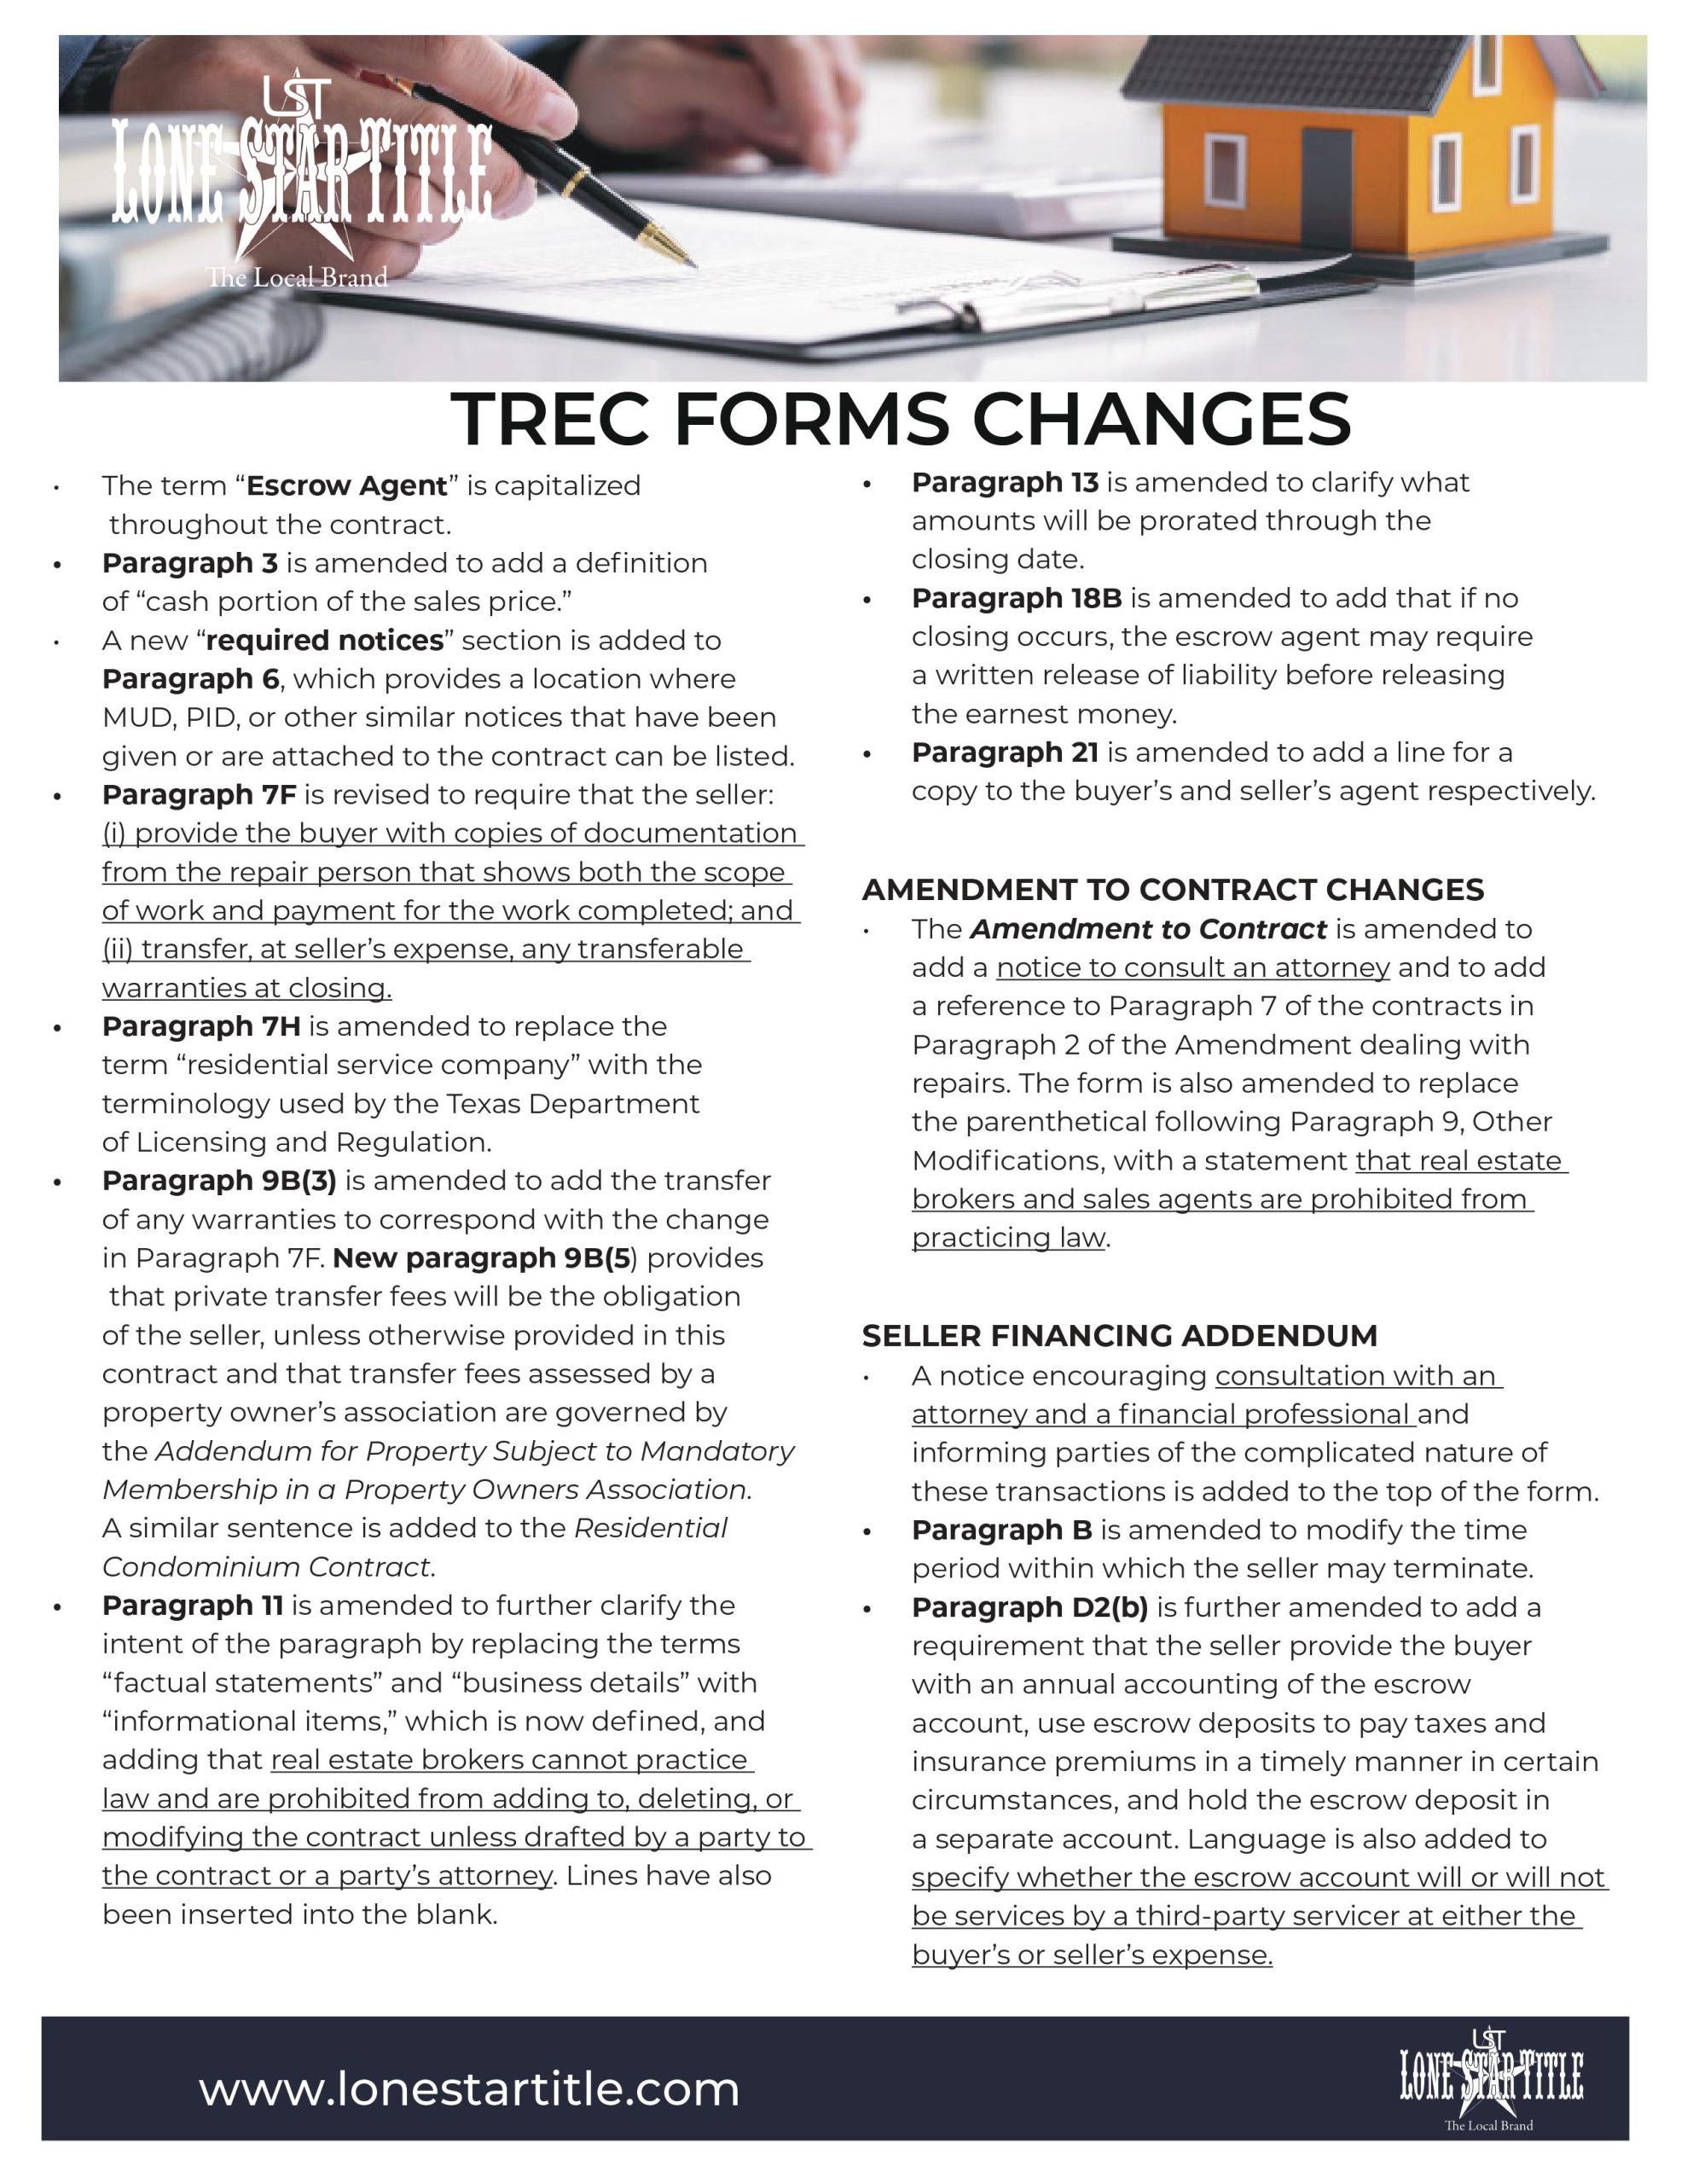 TREC Form Changes